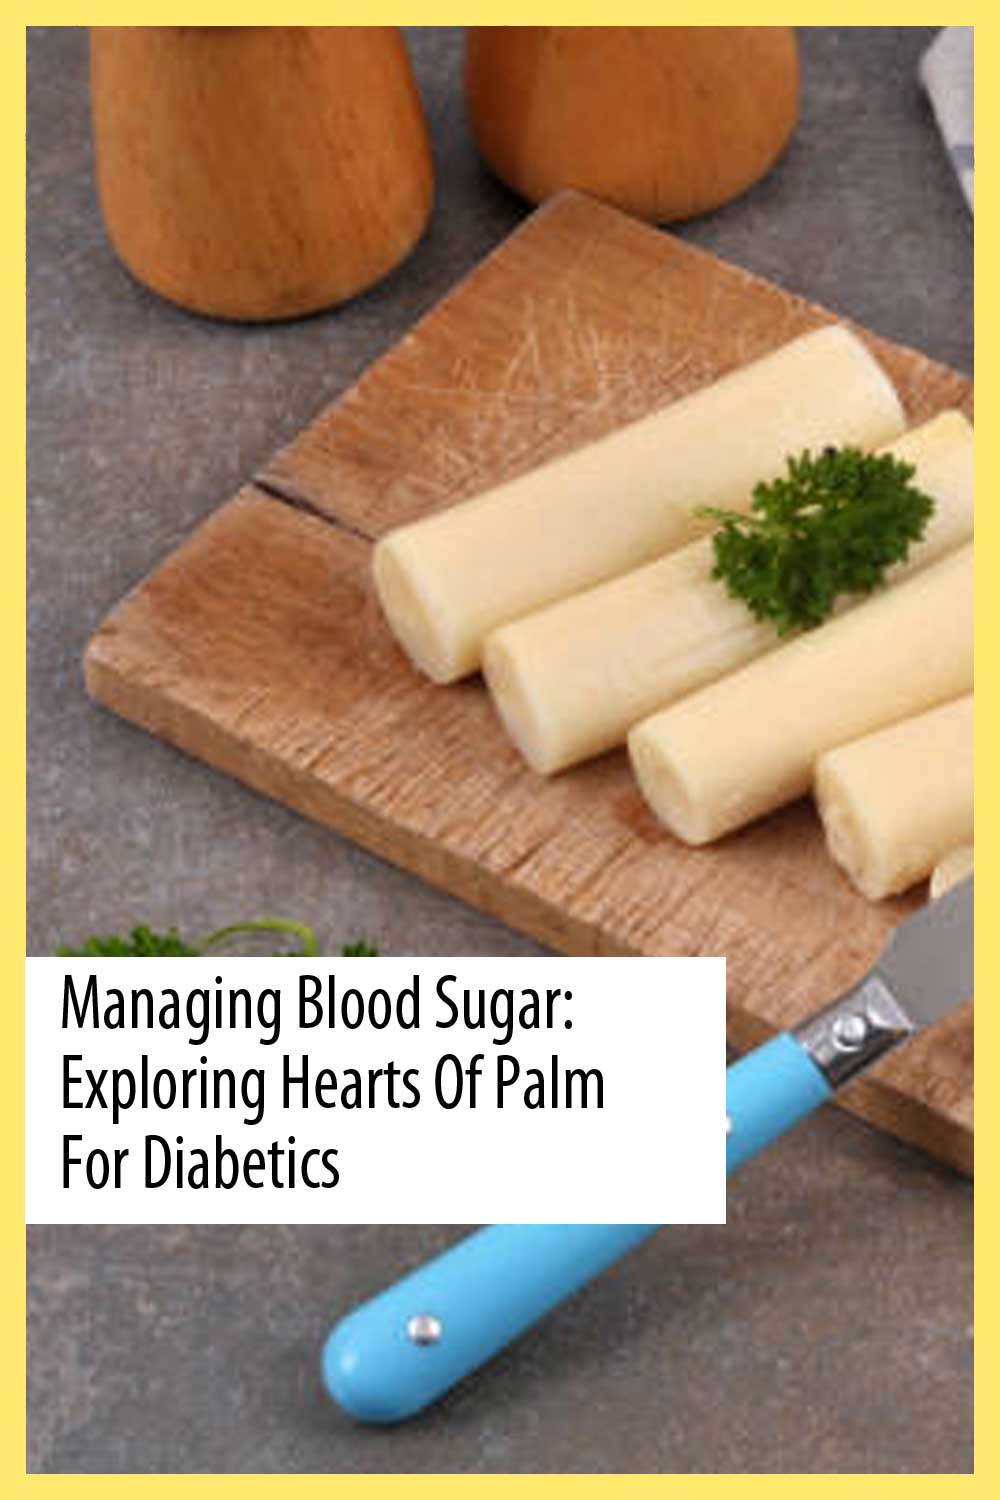 Managing Blood Sugar: Exploring Hearts of Palm for Diabetics